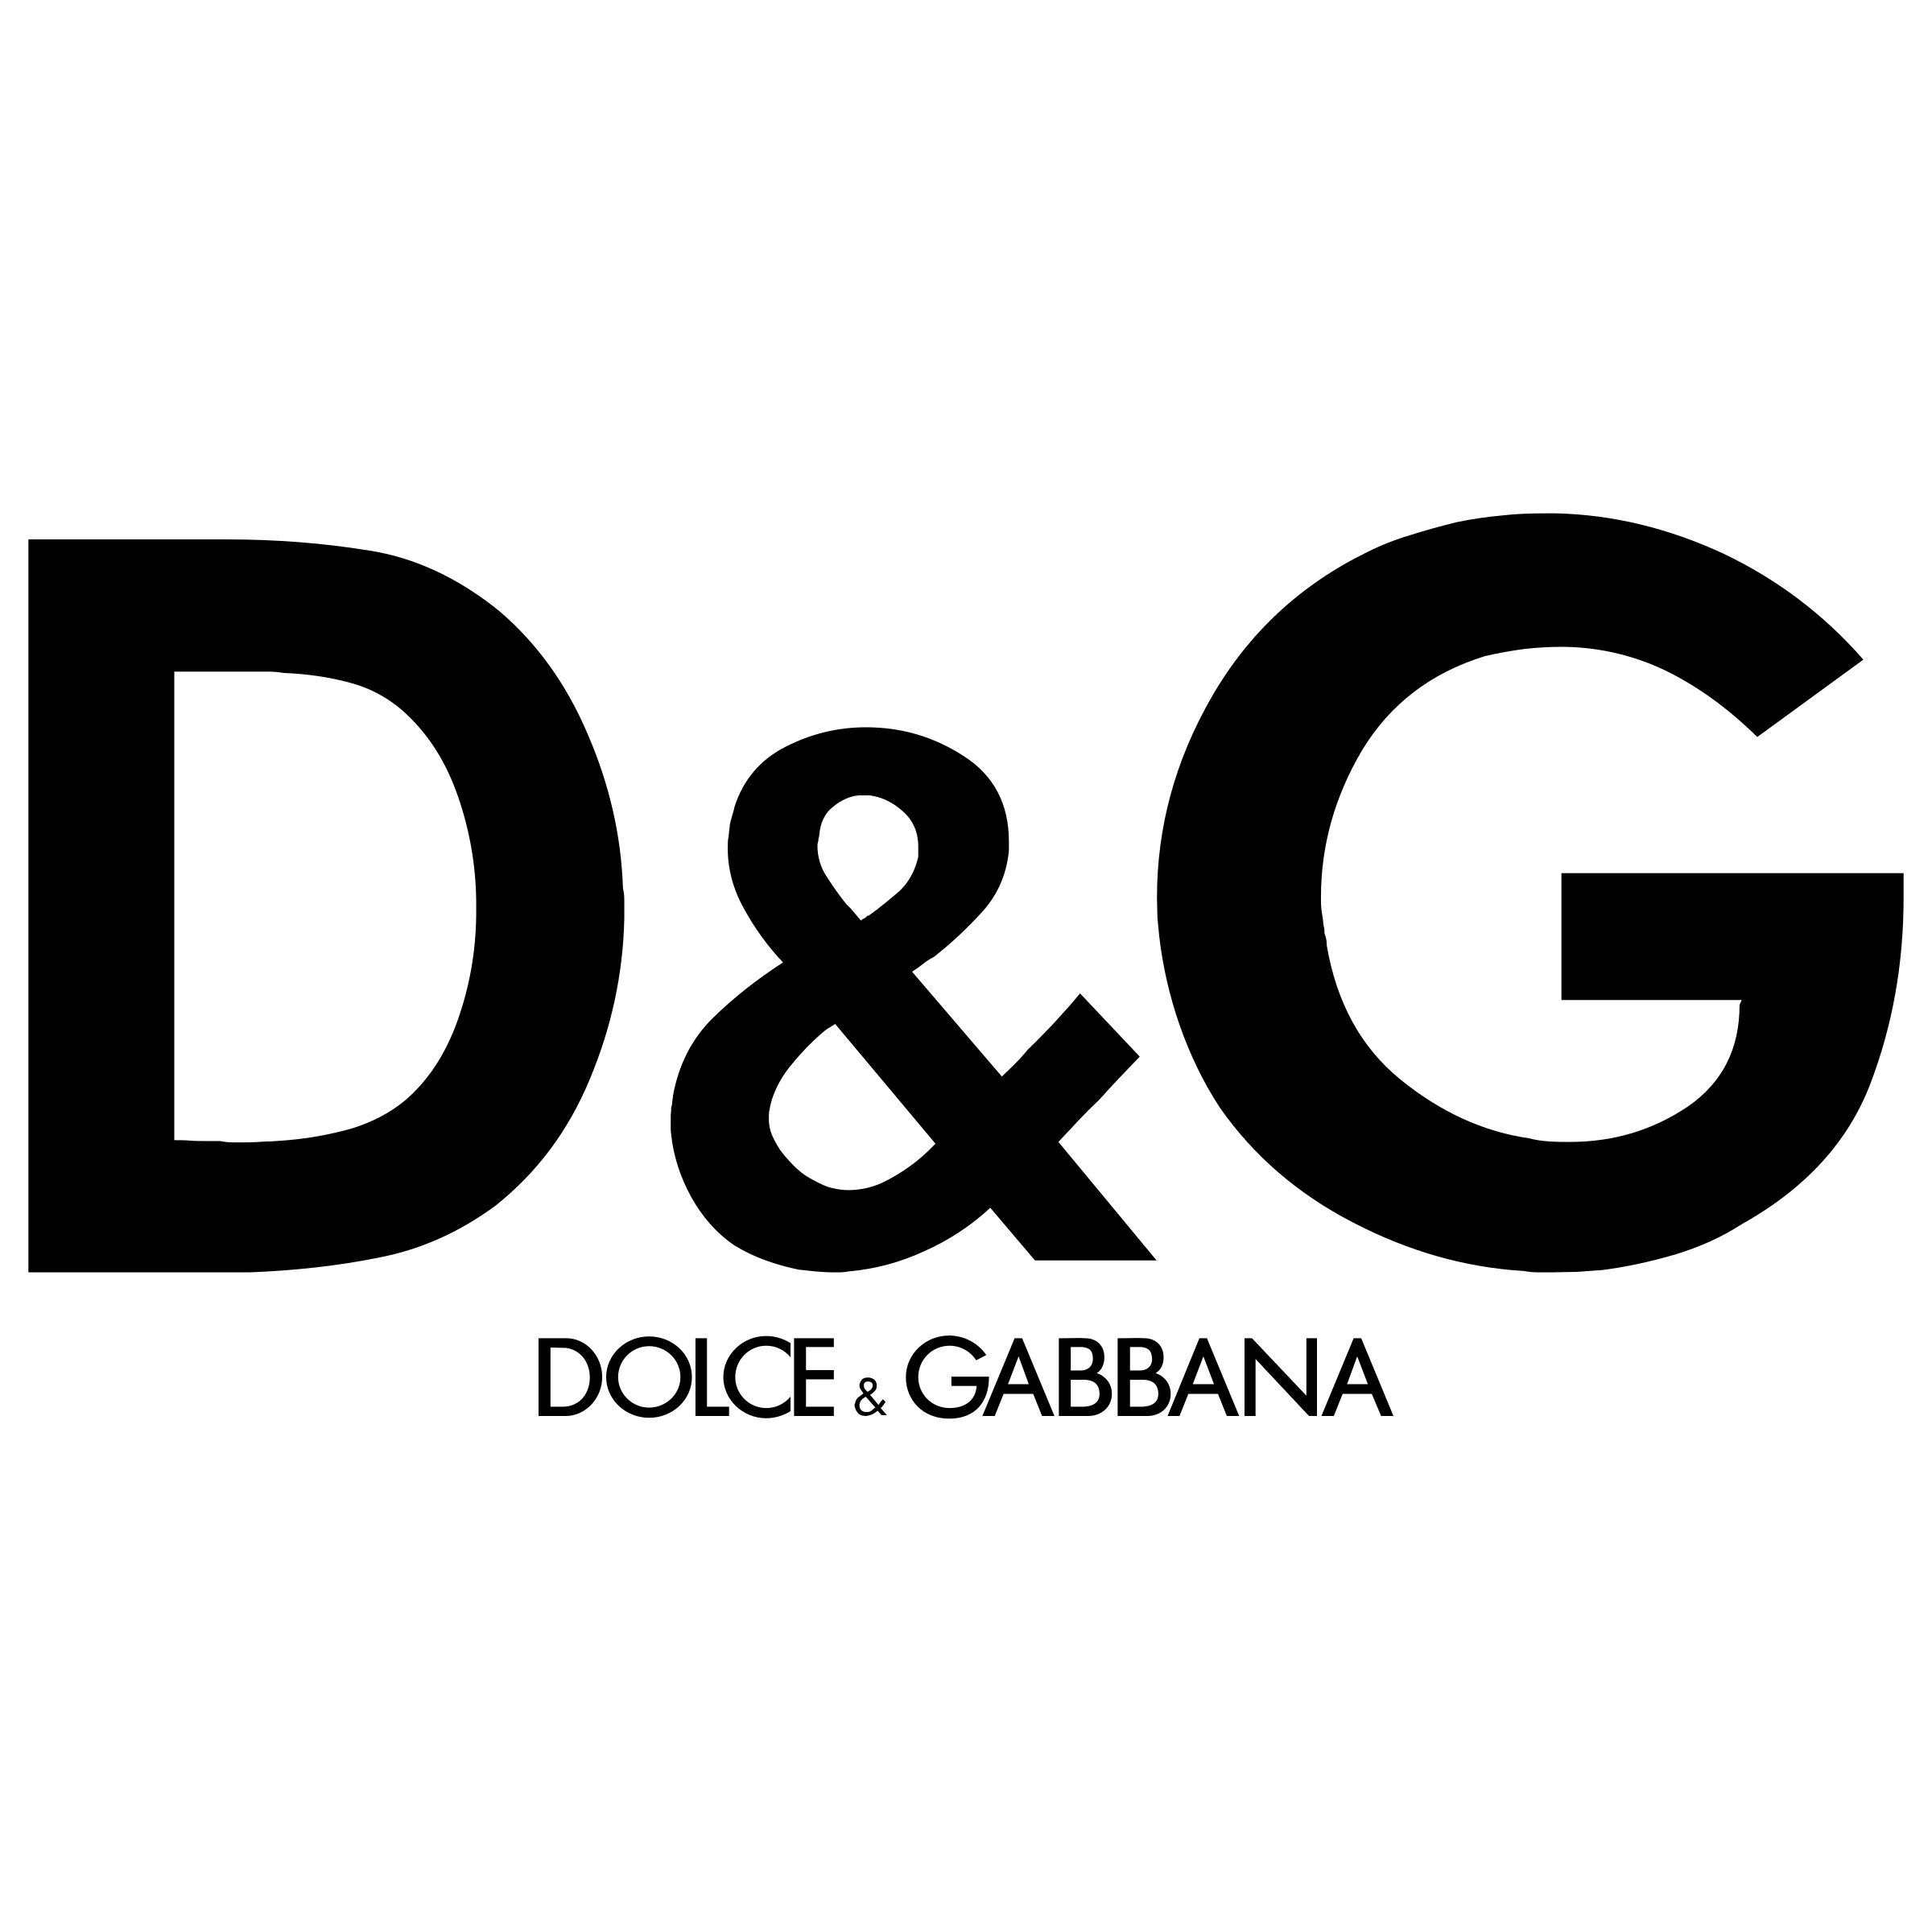 Dolce & Gabbana Logo - Dolce & Gabbana Logo PNG Transparent & SVG Vector - Freebie Supply